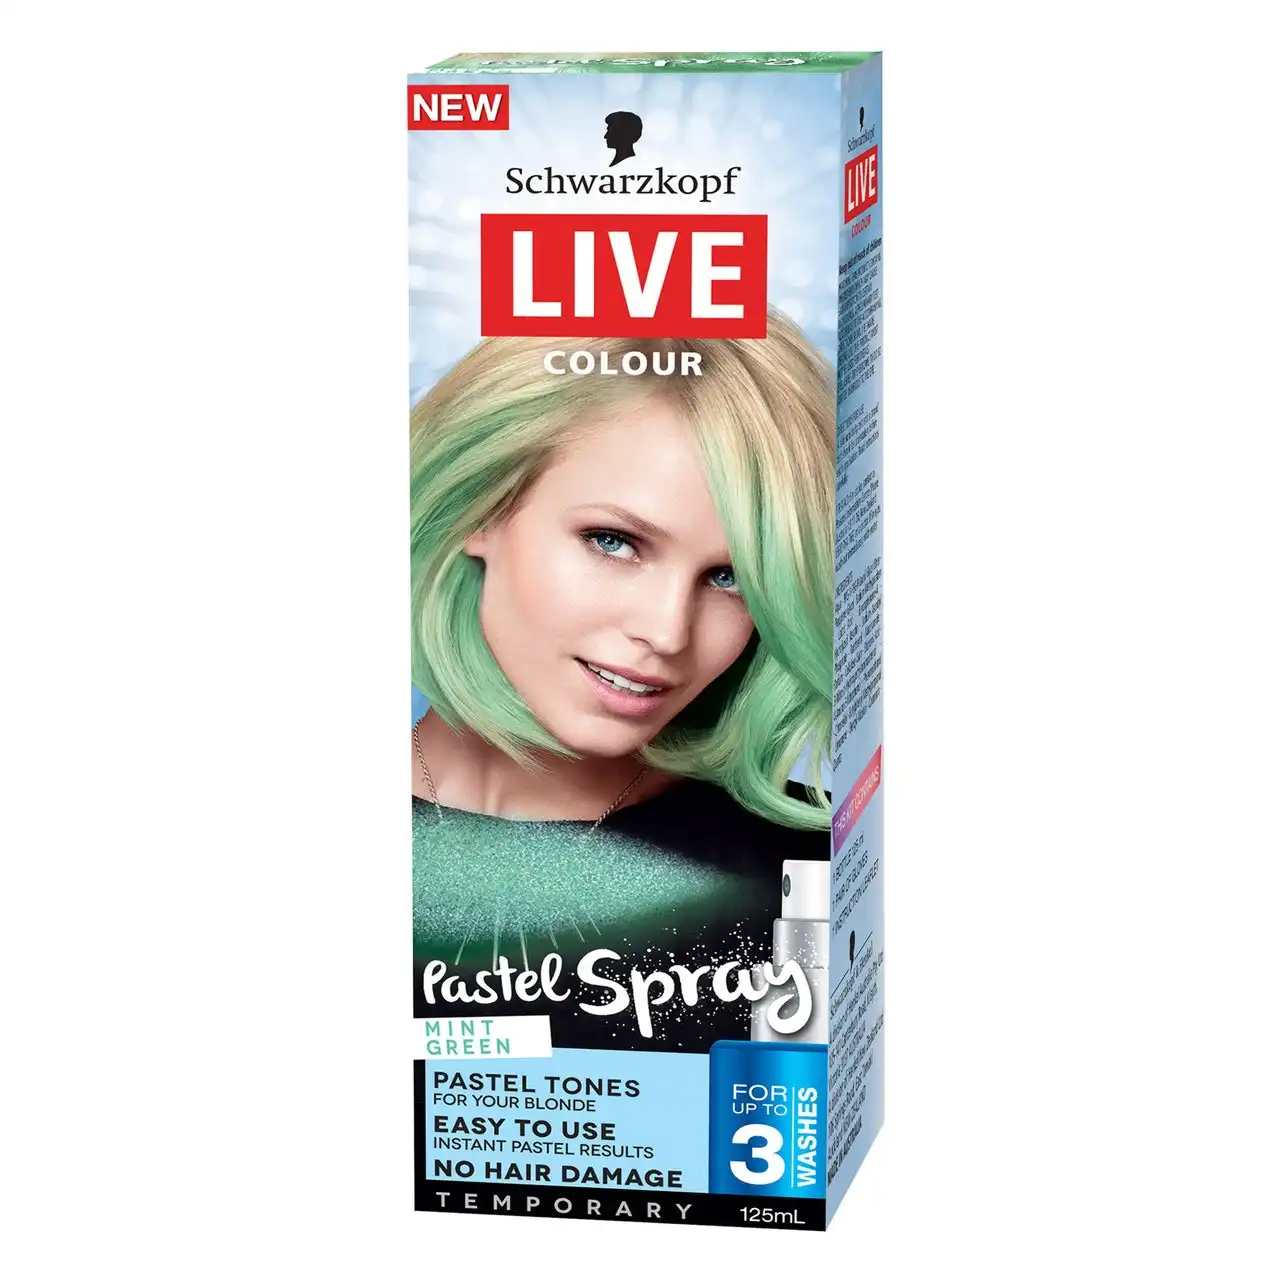 Schwarzkopf Live Colour Pastel Spray 125ml Mint Green